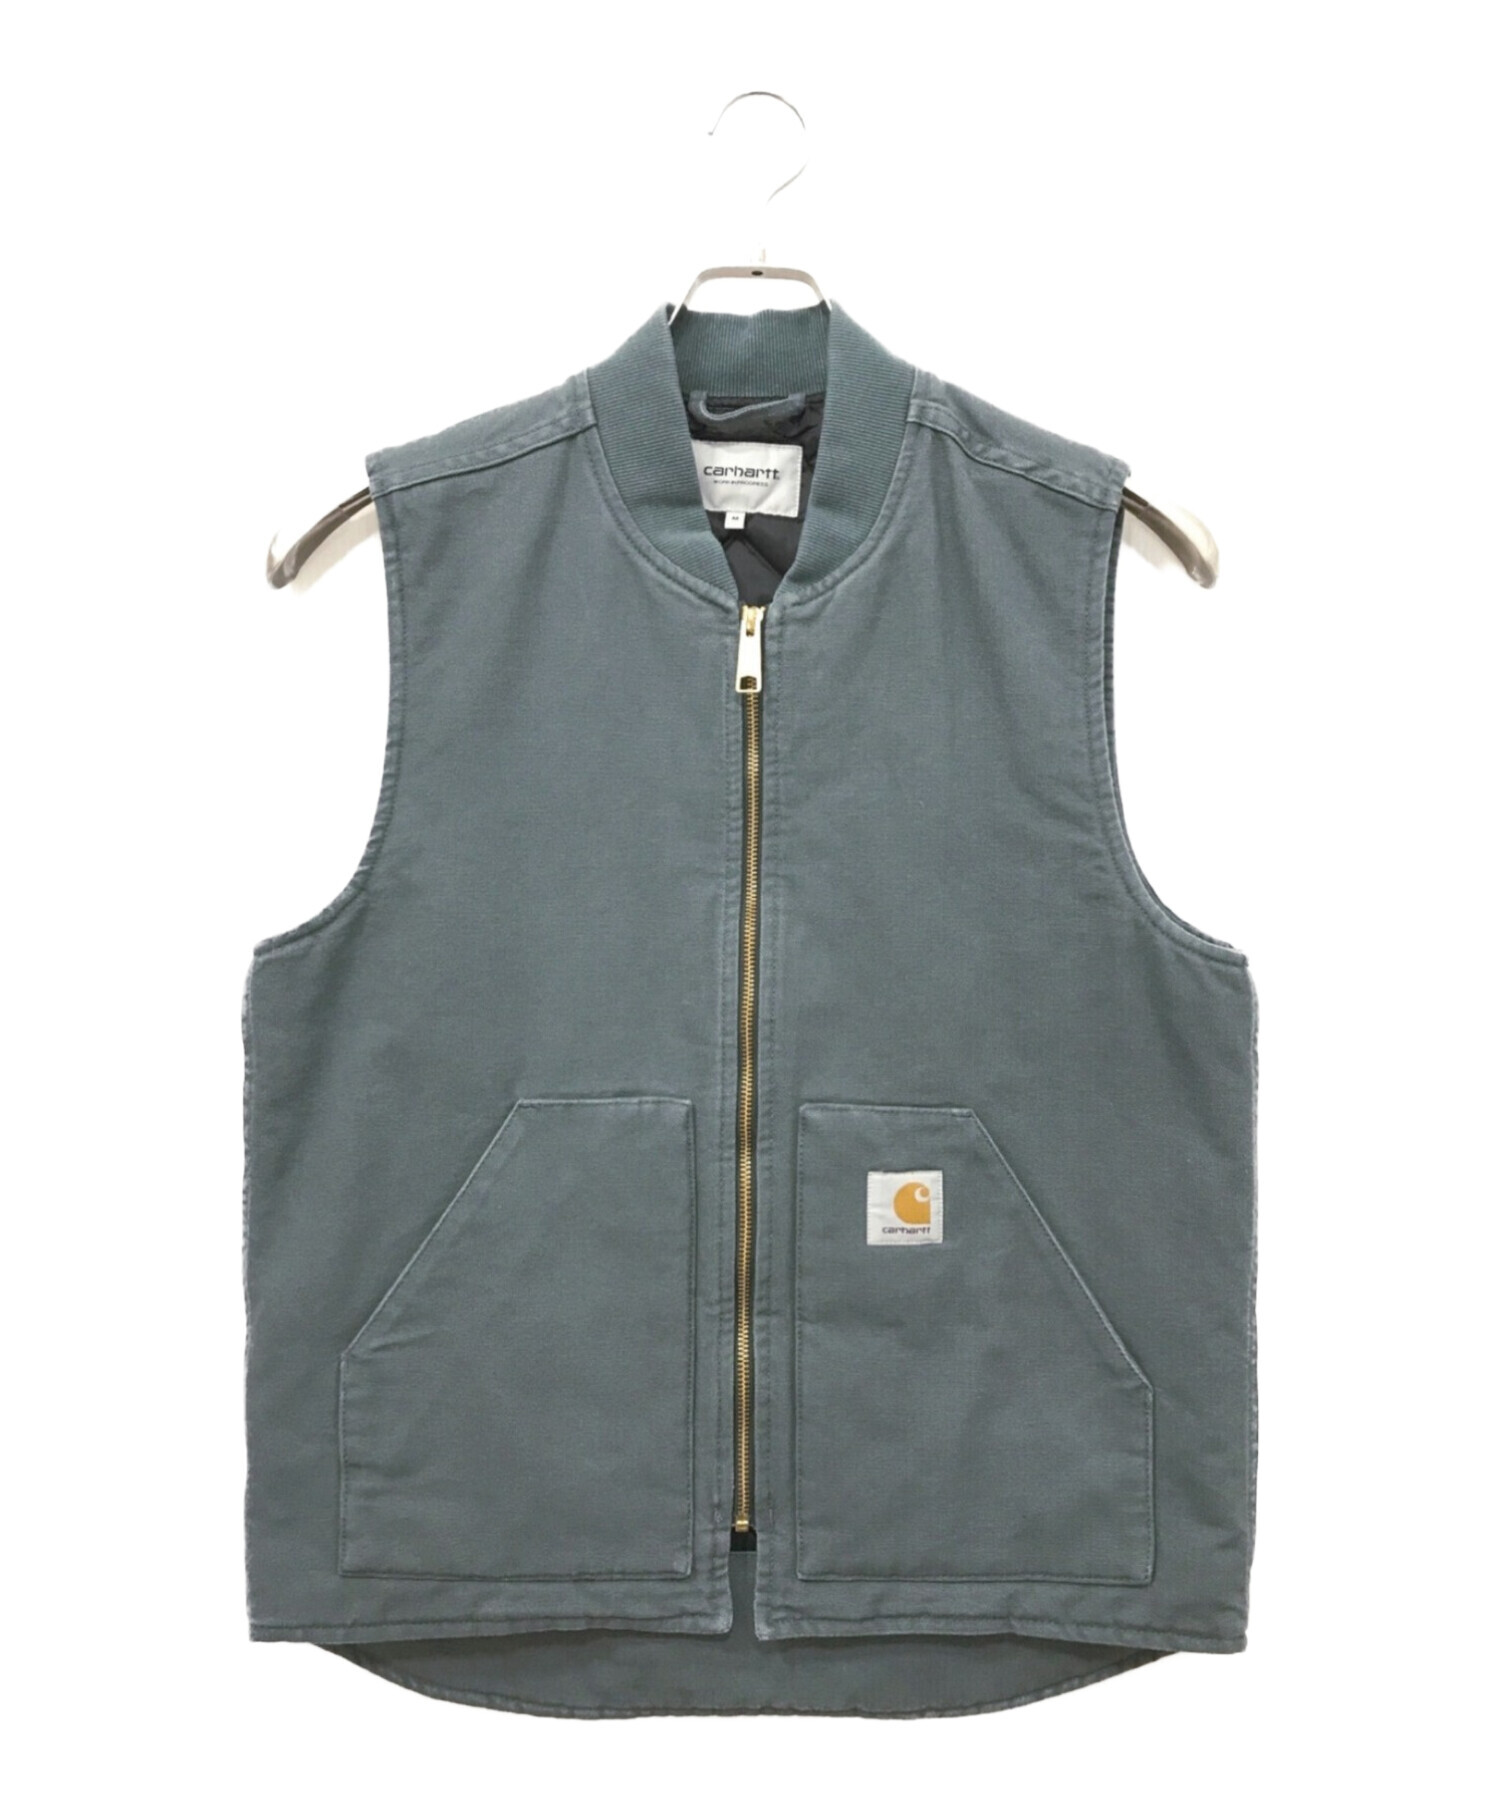 Carhartt WIP (カーハートダブリューアイピー) classic vest グリーン サイズ:M